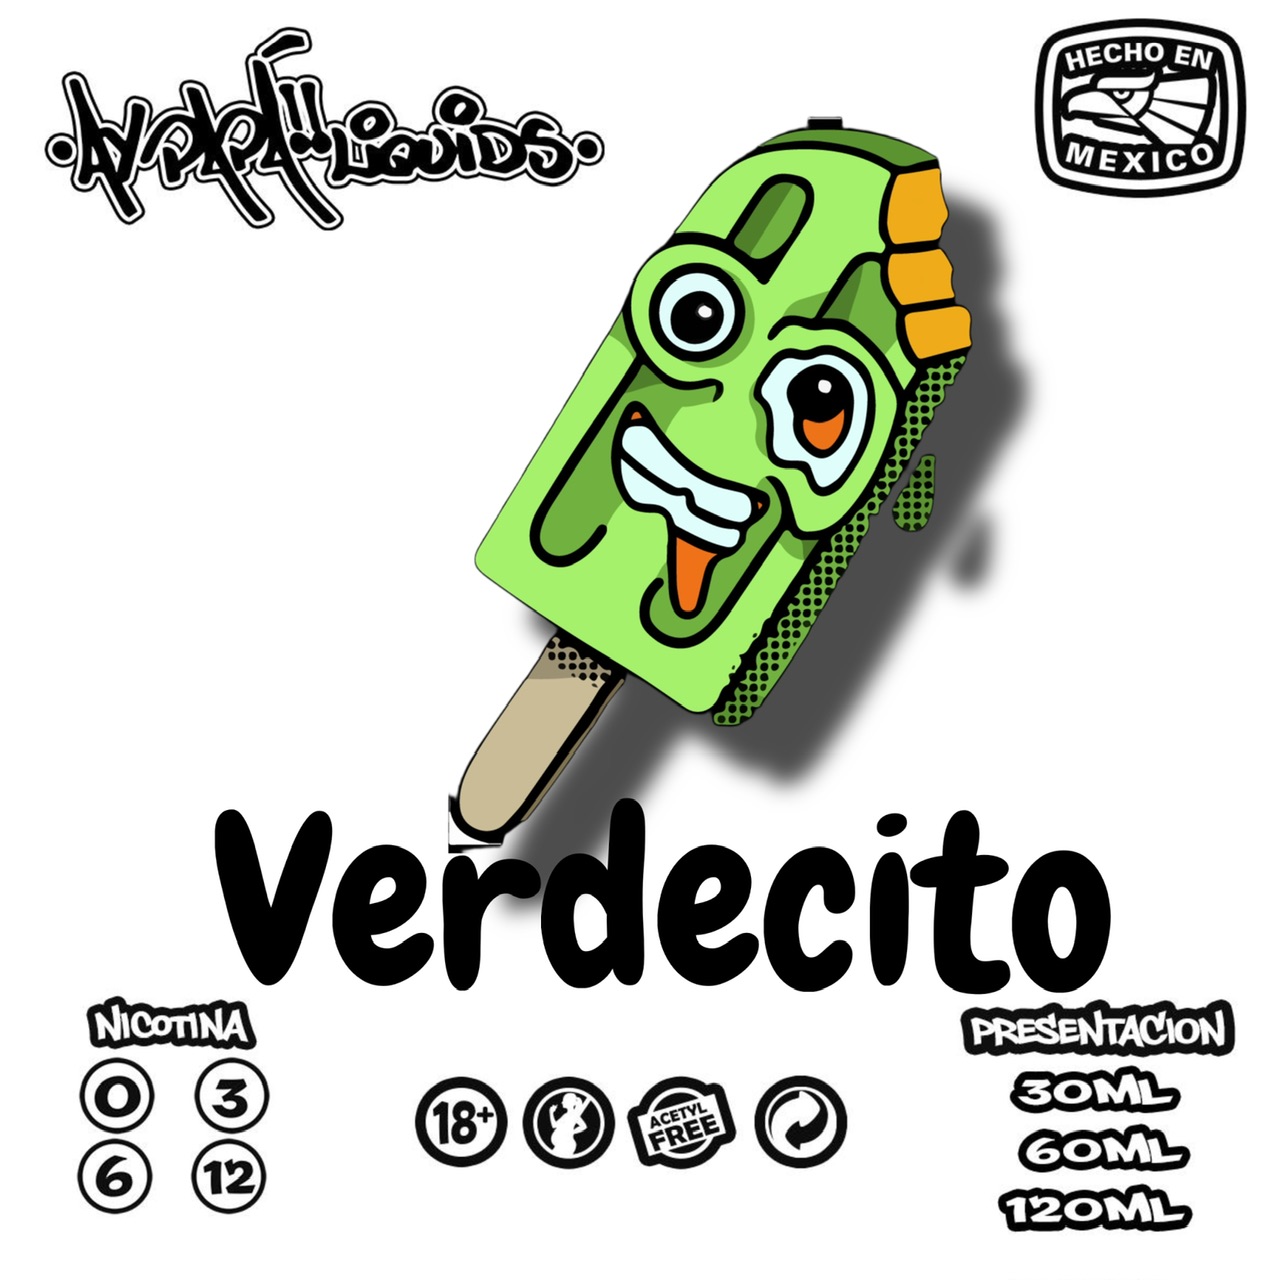 Verdecito